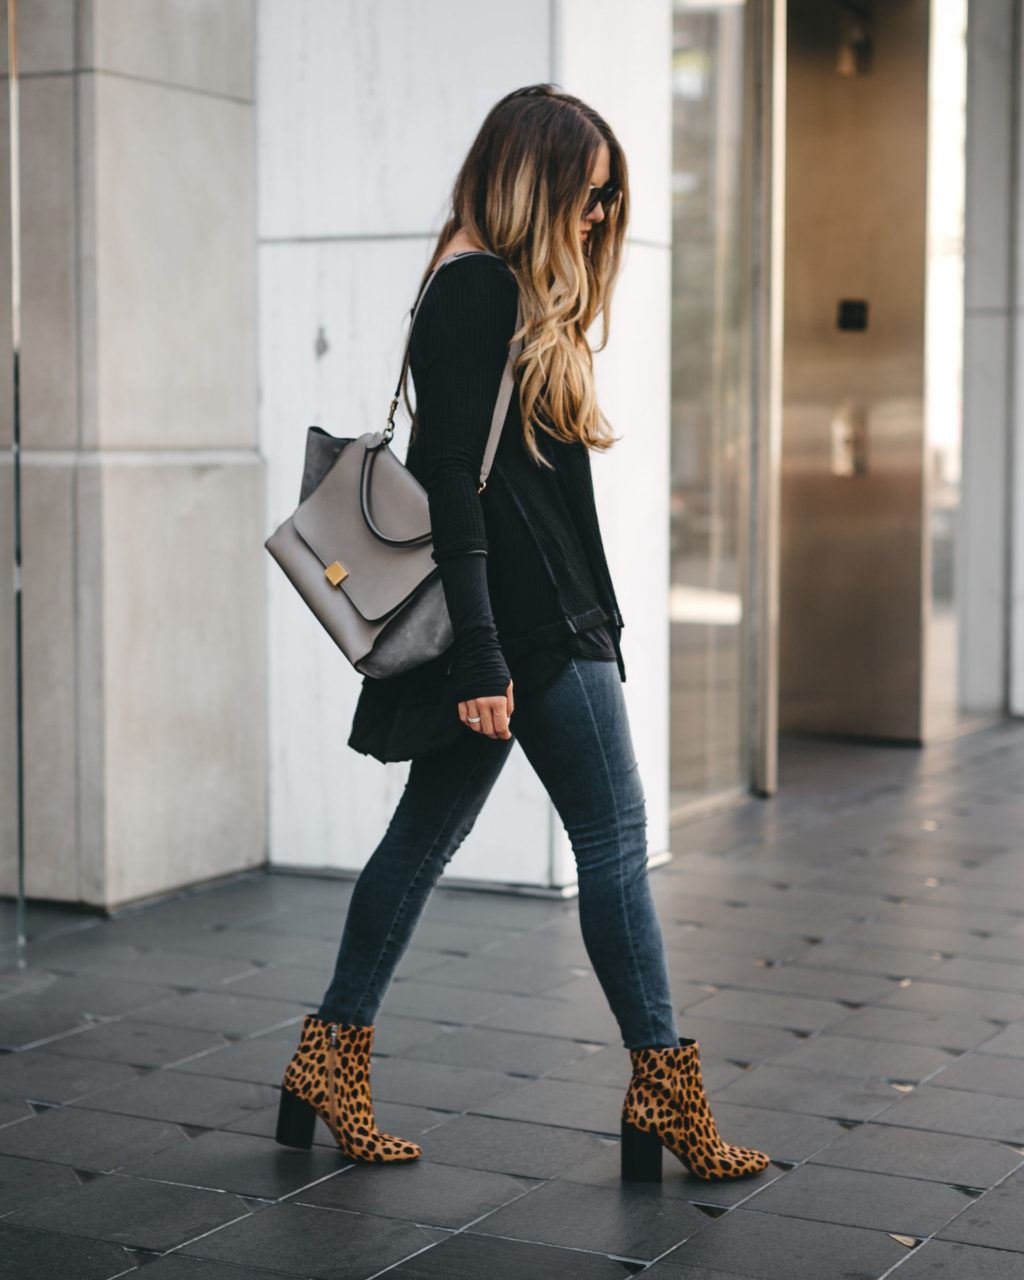 Leopard Boots  The Teacher Diva: a Dallas Fashion Blog featuring